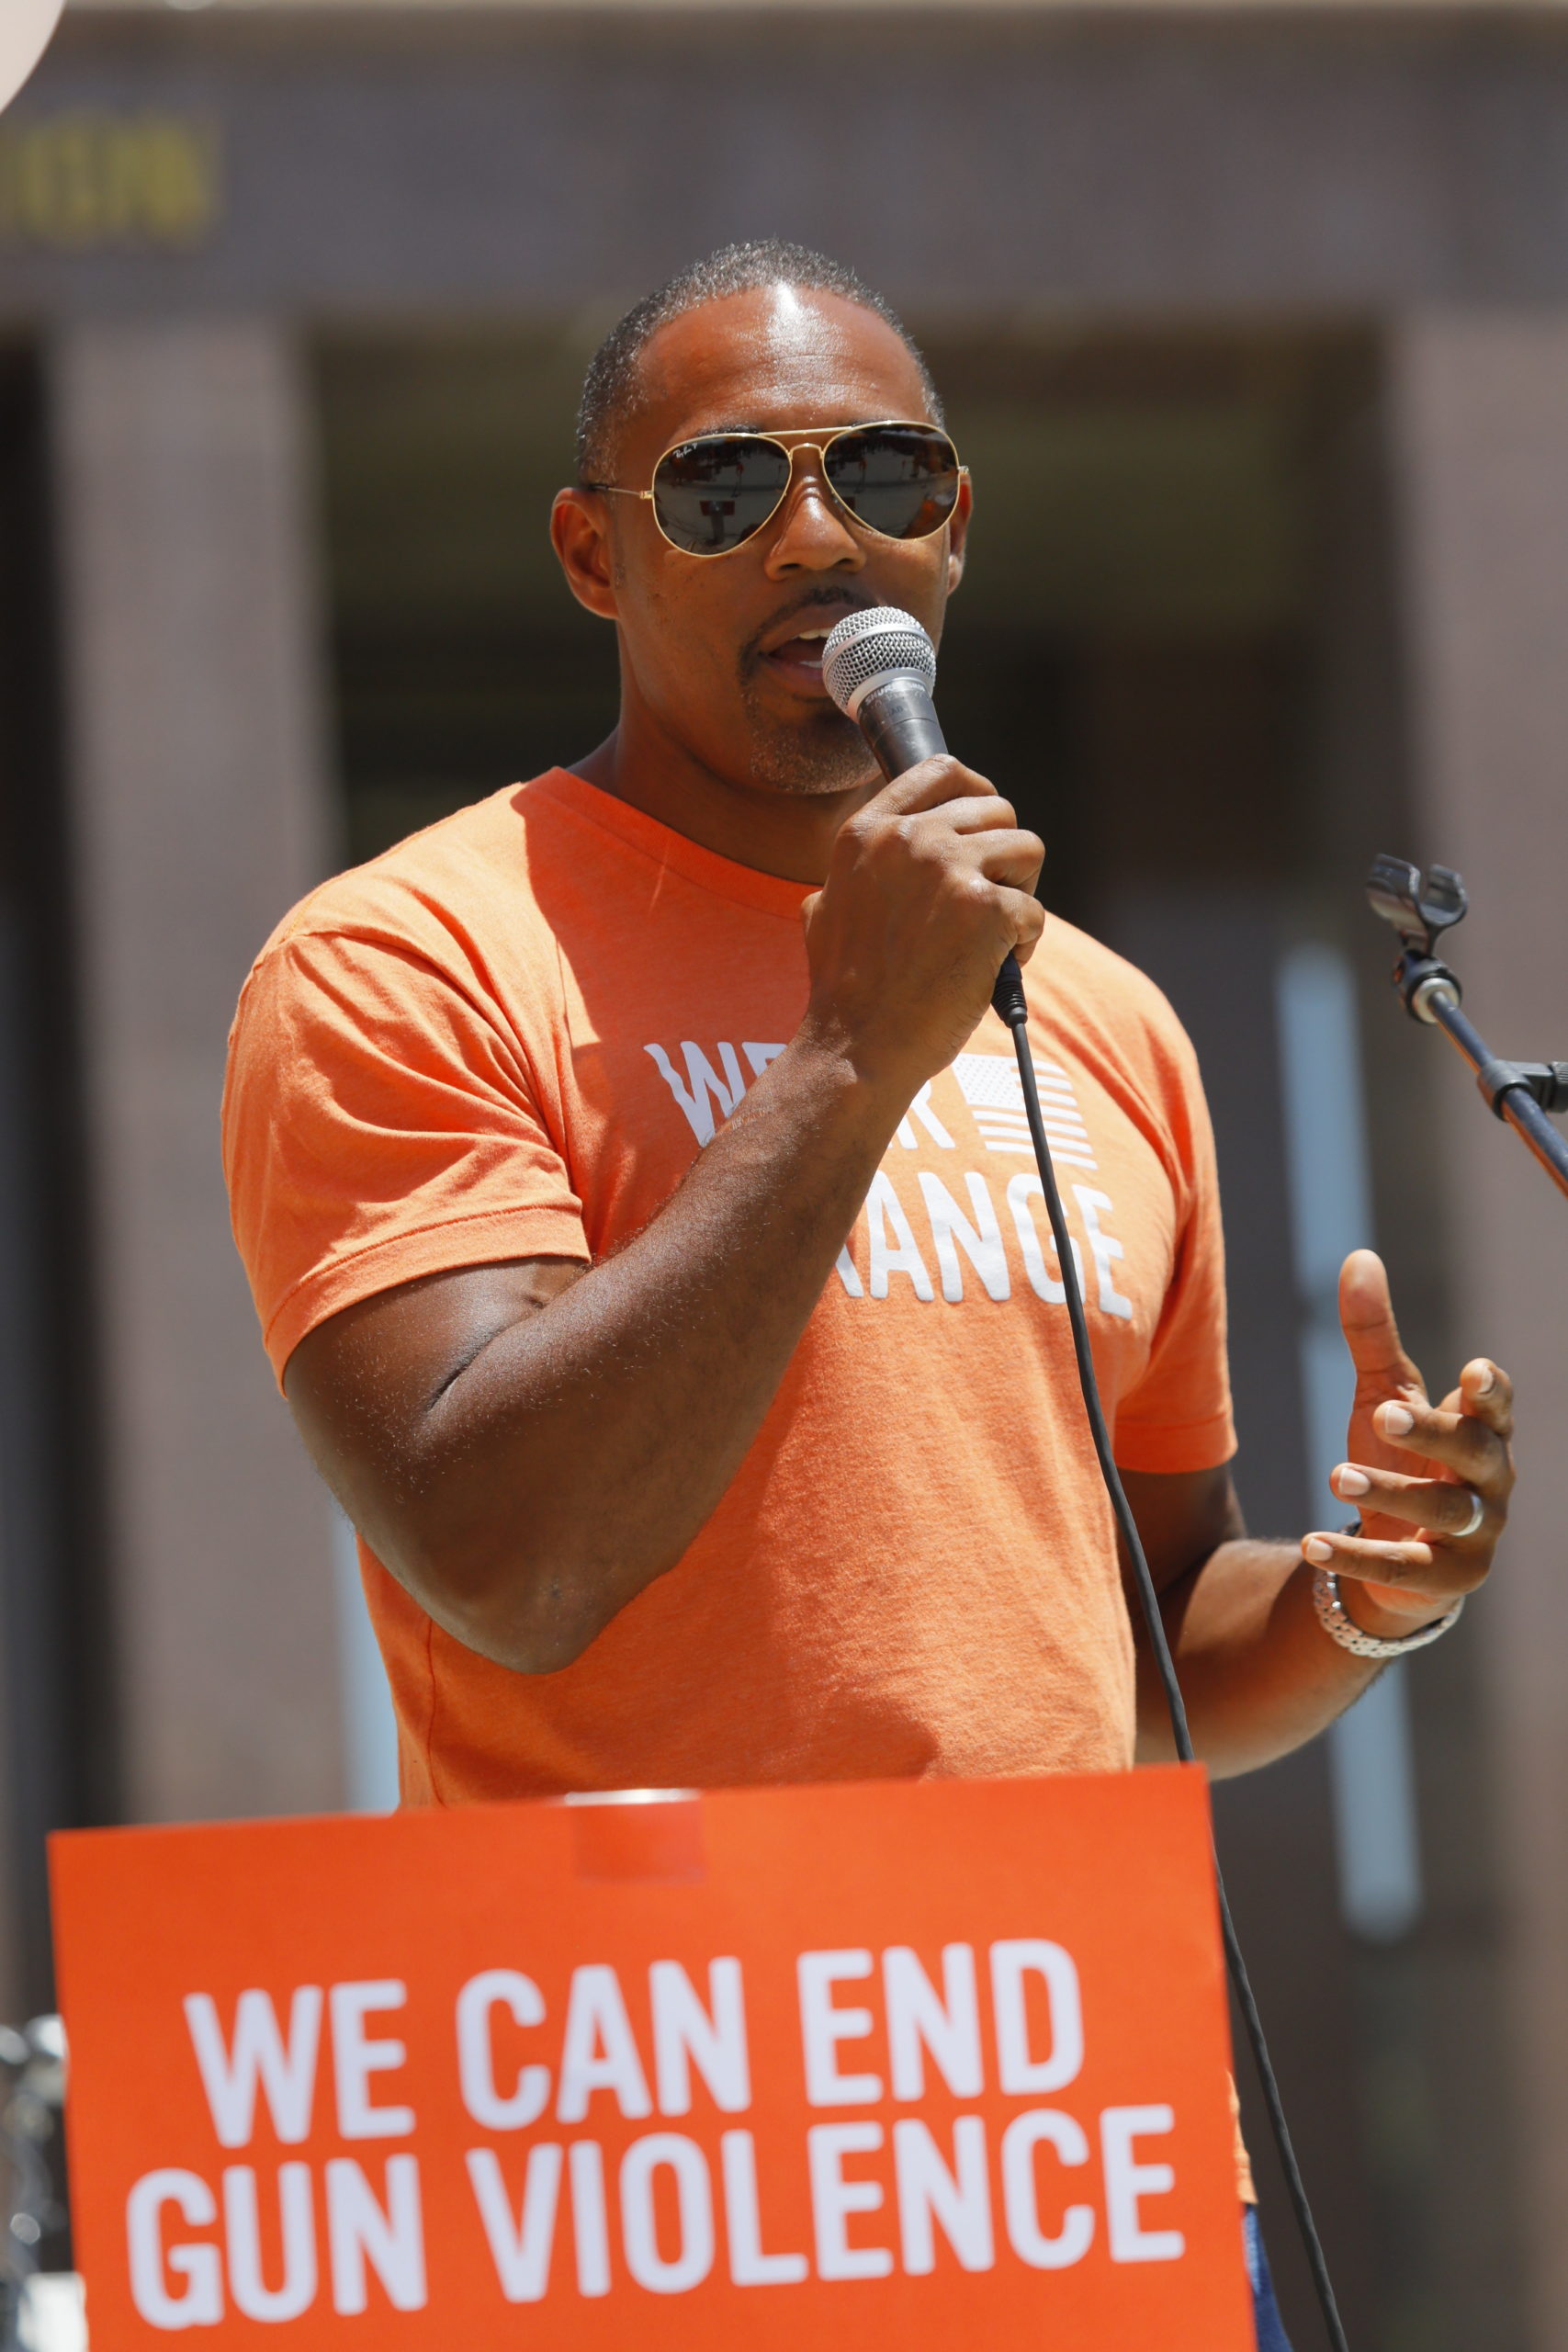 Jason Winston George speaks at a Wear Orange event